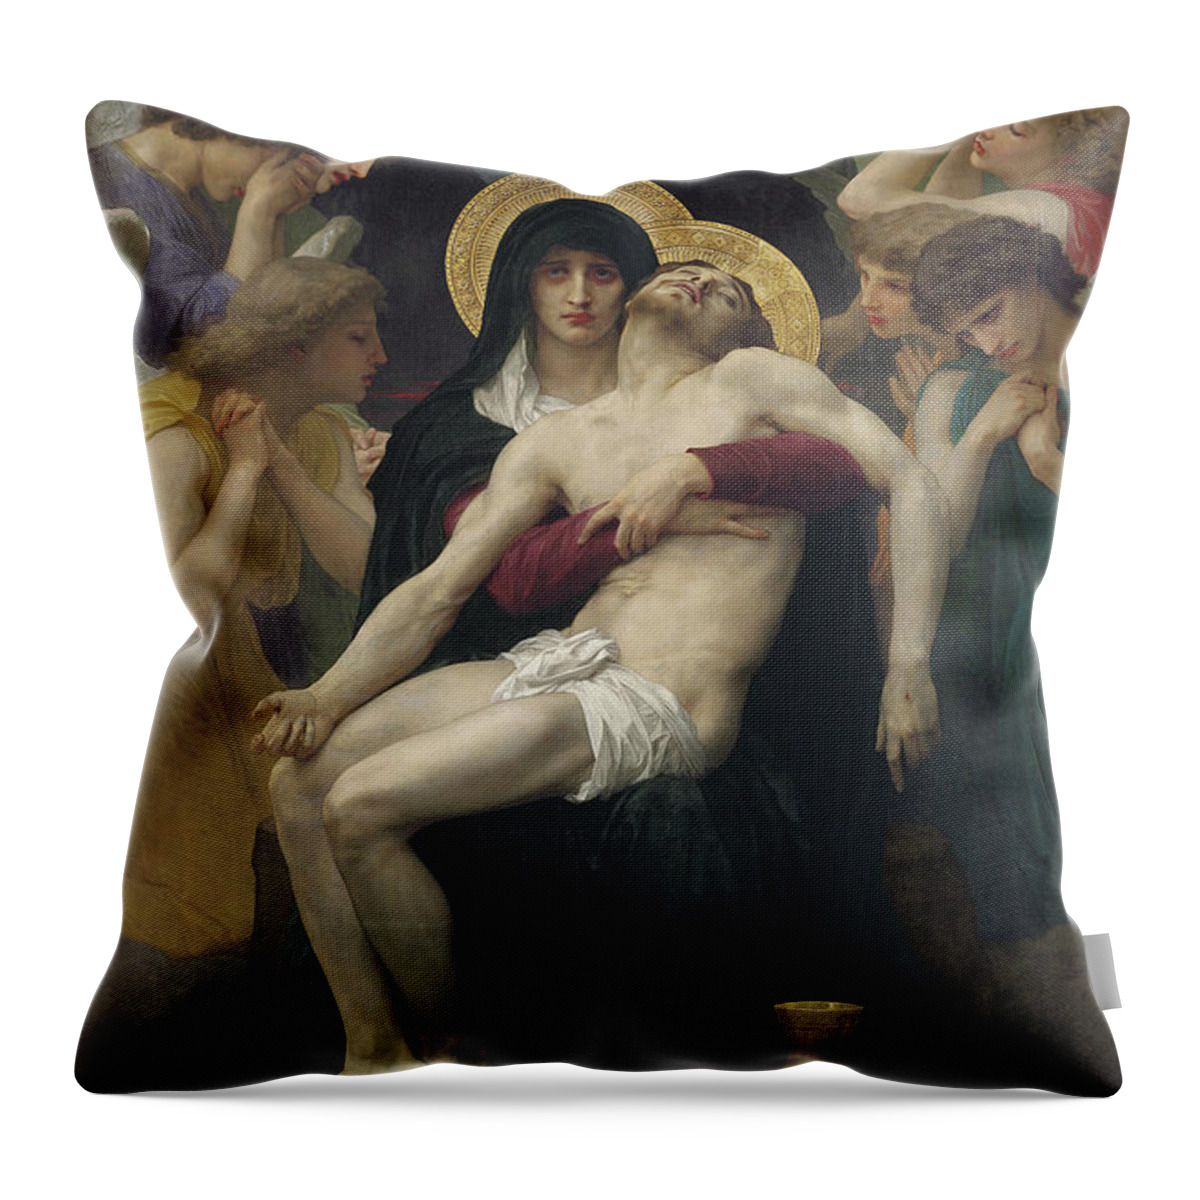 Pieta Throw Pillow featuring the painting Pieta by William Adolphe Bouguereau